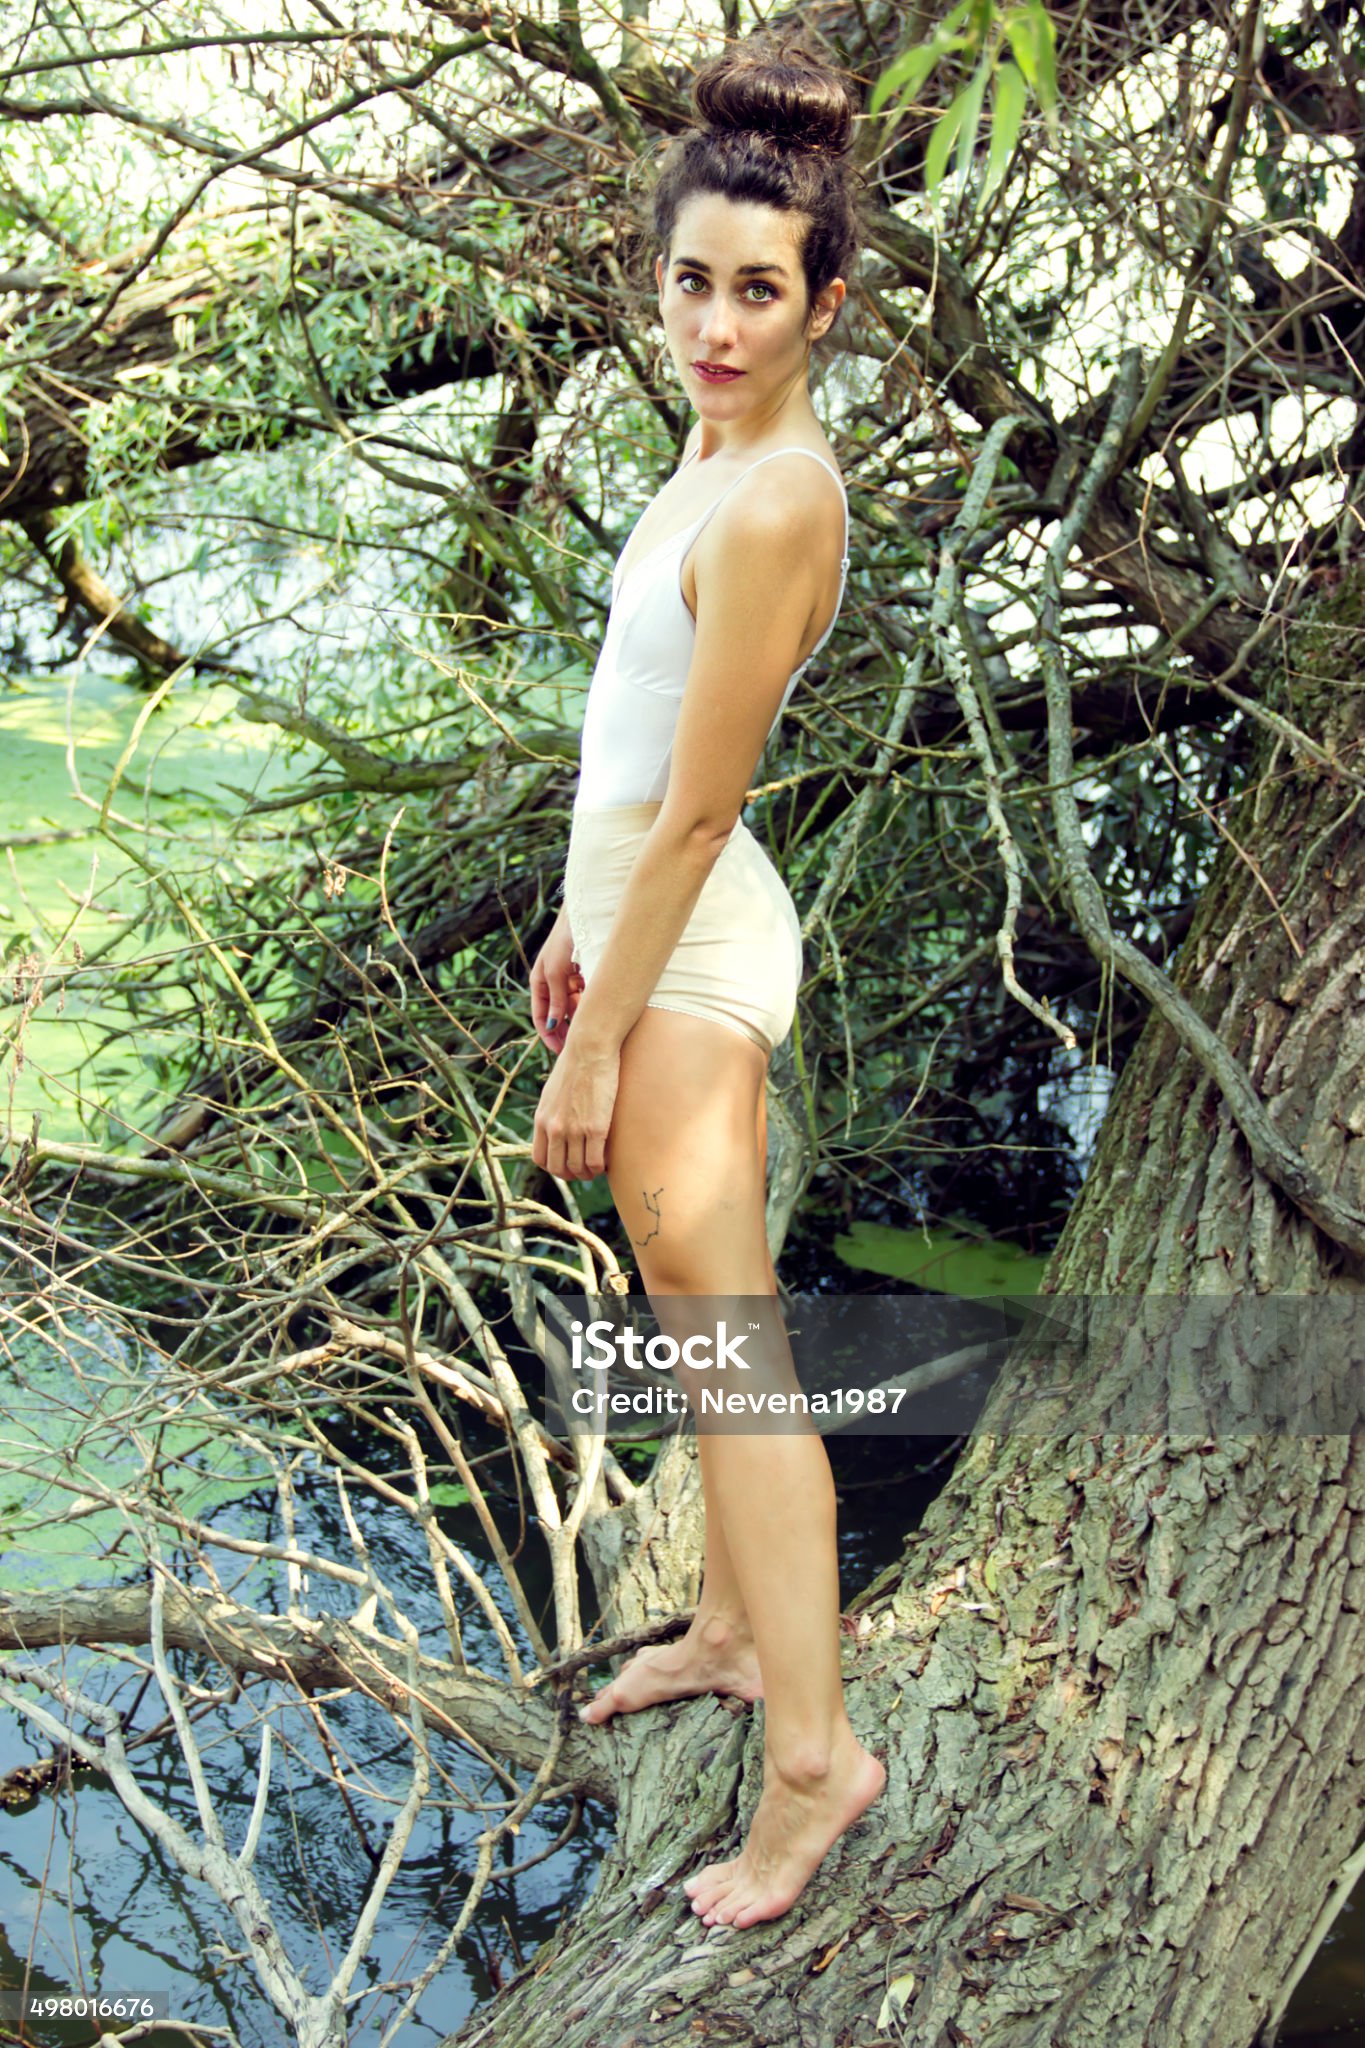 https://media.istockphoto.com/id/498016676/photo/beautiful-young-woman-standing-on-a-tree-branch.jpg?s=2048x2048&amp;w=is&amp;k=20&amp;c=bKdK_fLs3TKcHDYvE1xI5-RTdE0lPoxD07Ovv4hjZto=